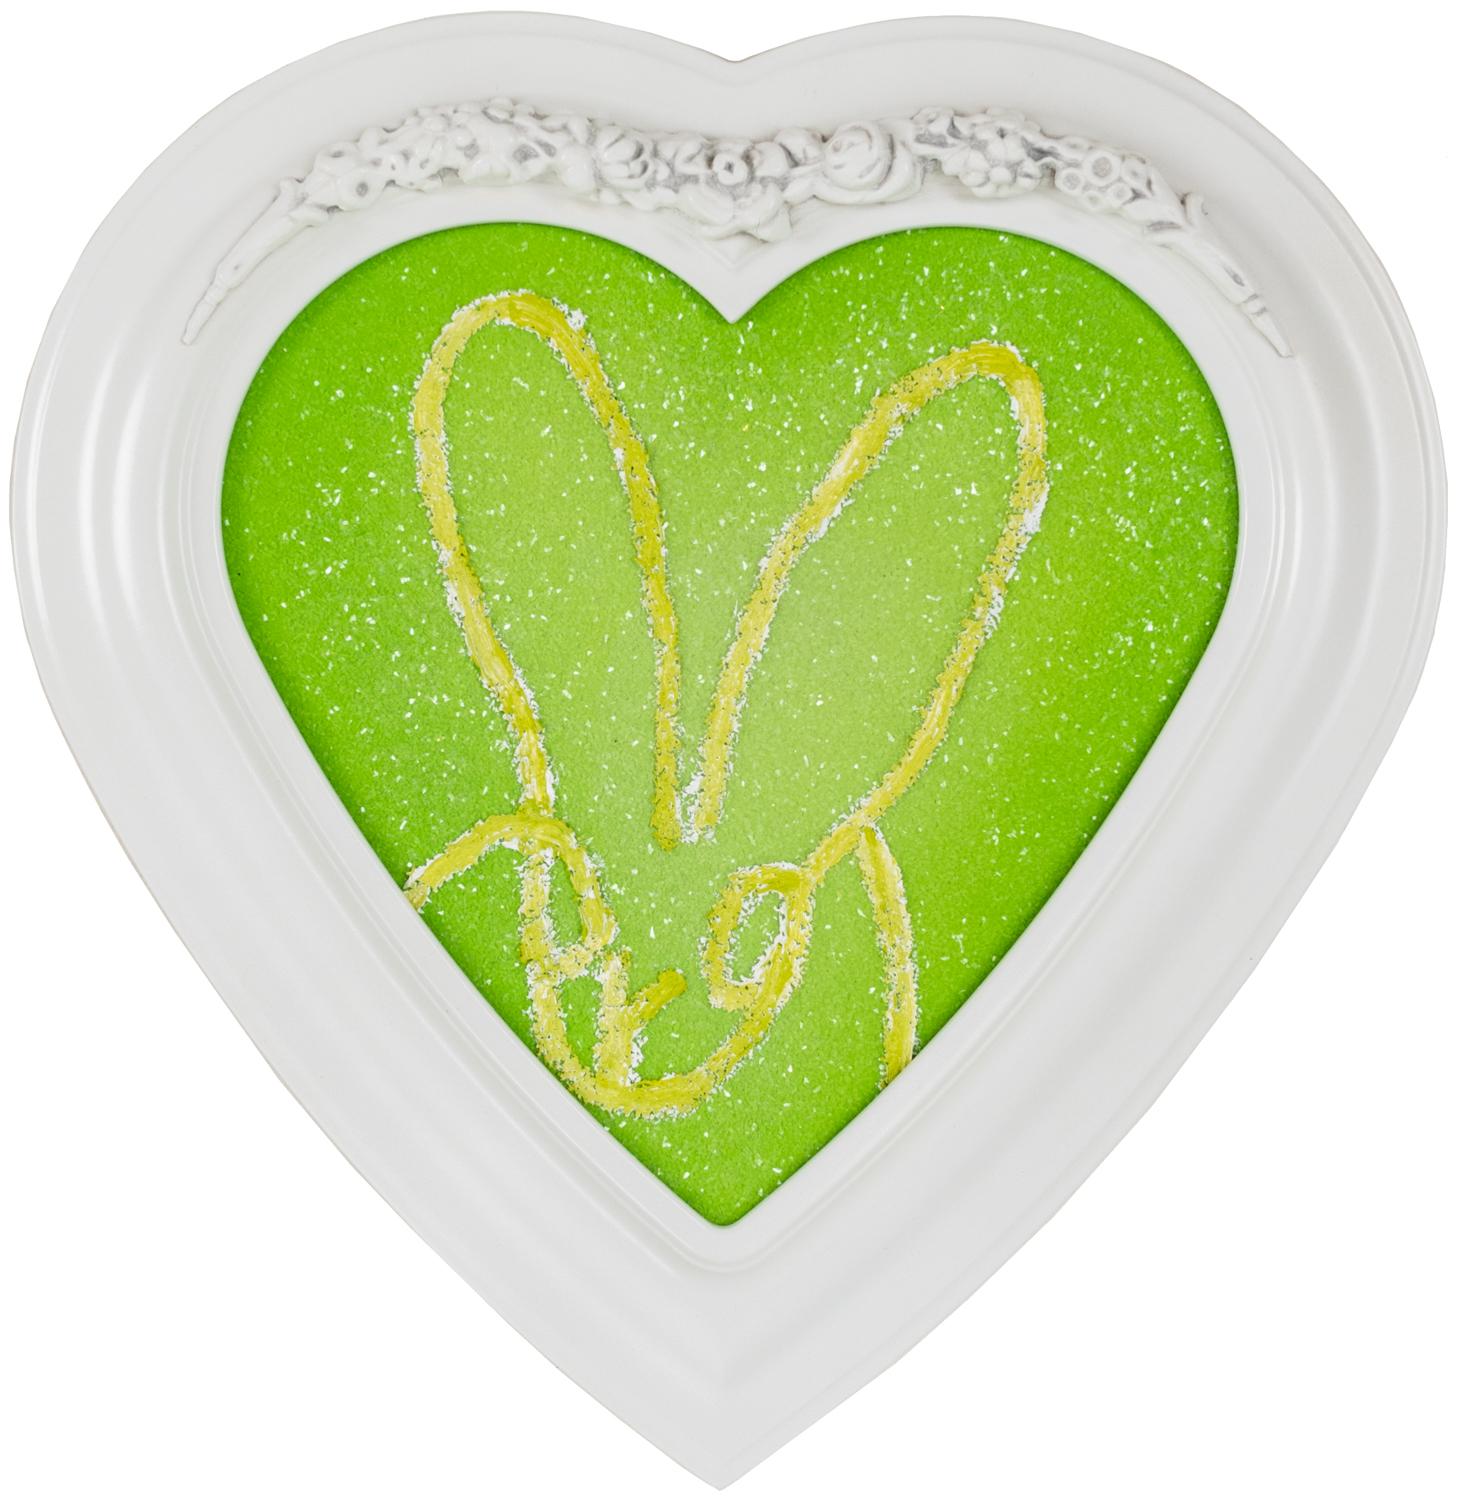 Hunt Slonem "Untitled" Green Heart Diamond Dust